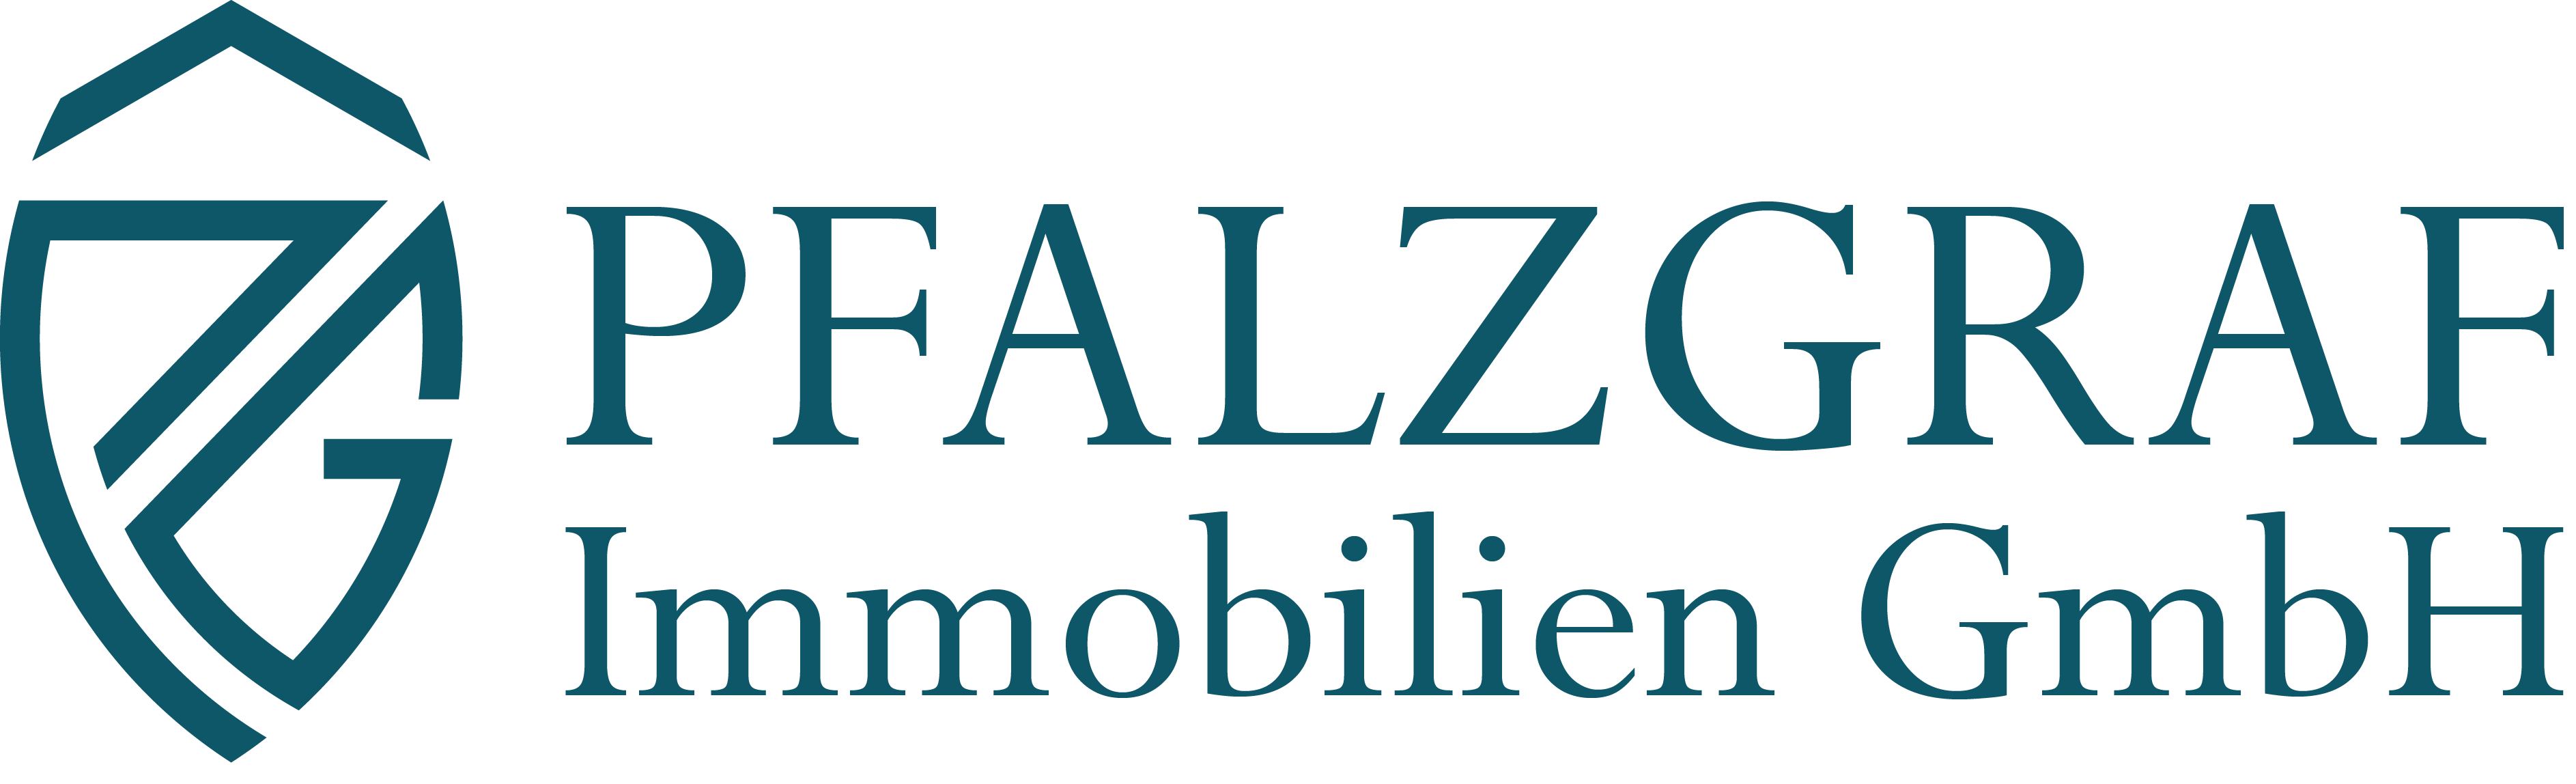 PFALZGRAF Immobilien GmbH